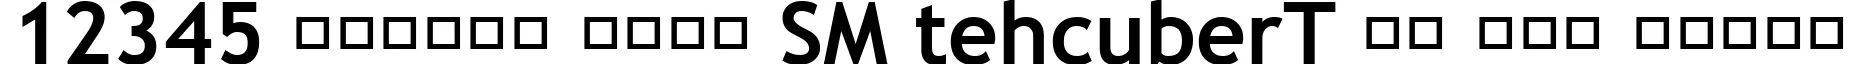 Dynamic Trebuchet MS Bold Font Preview https://safirsoft.com